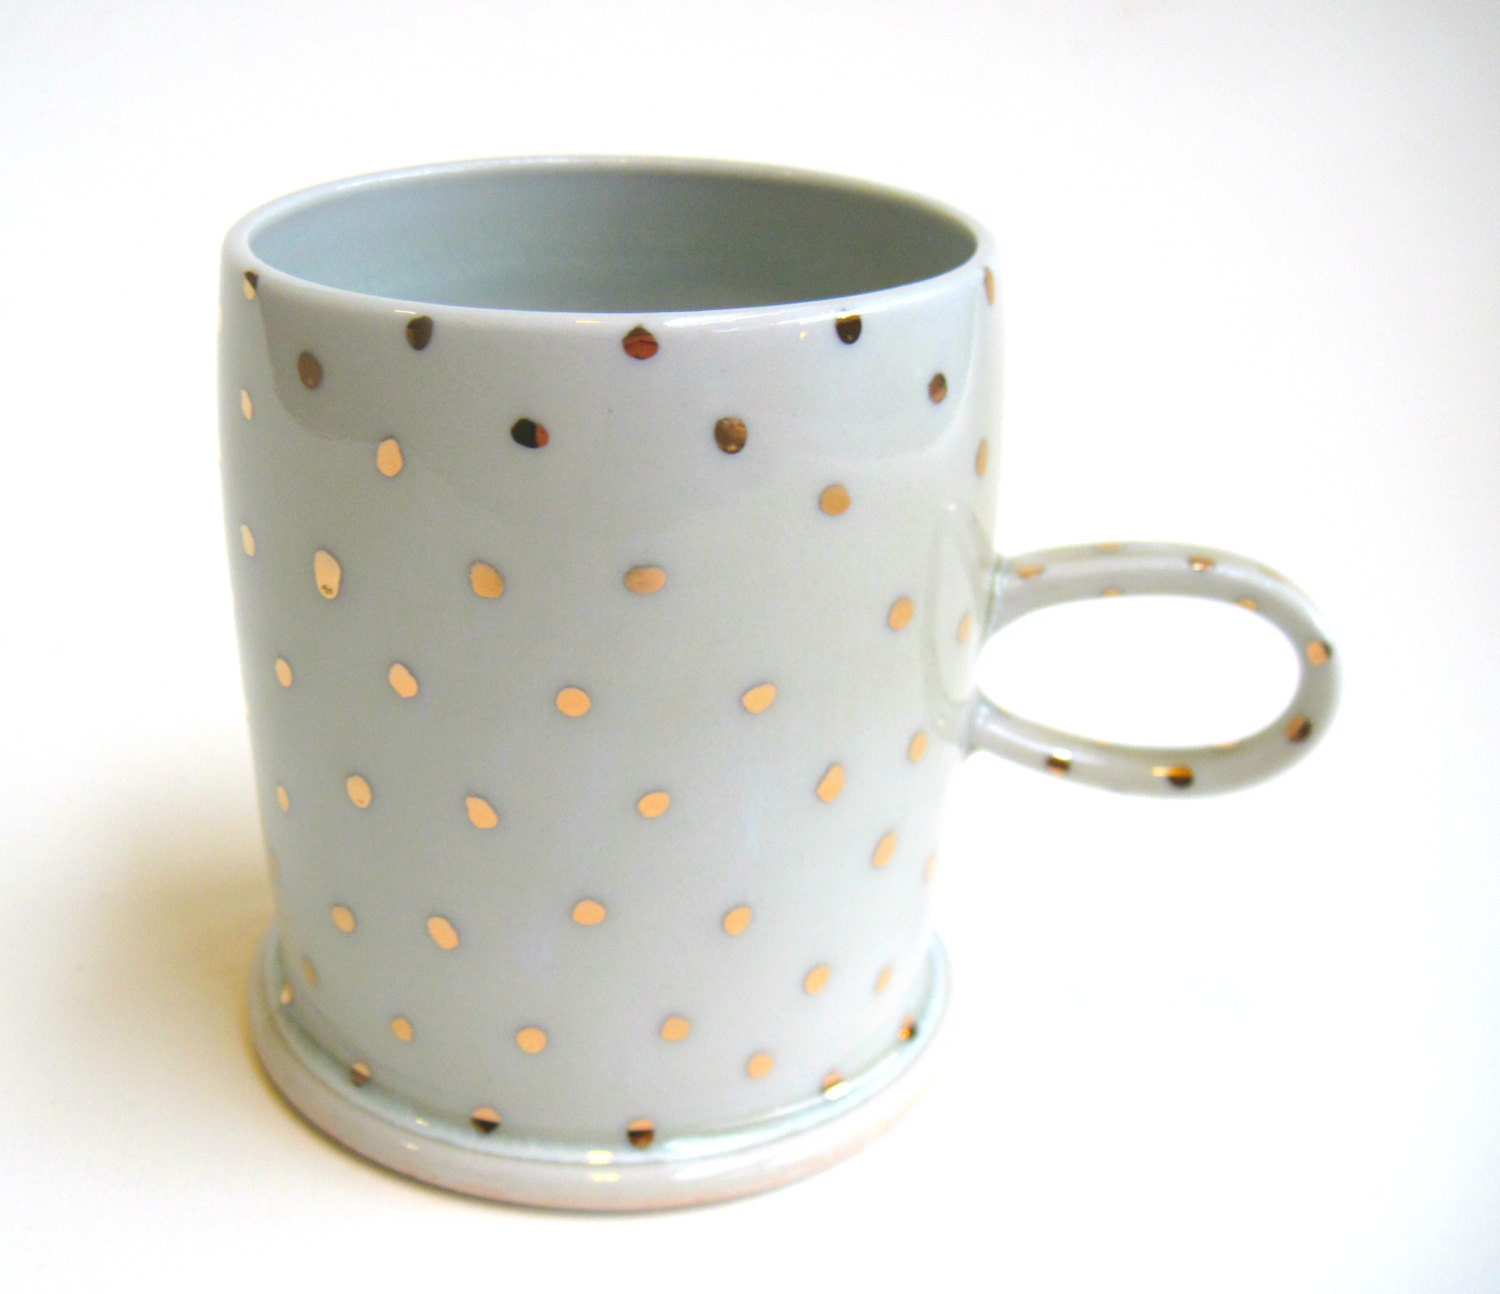 ... SilverLiningCeramics MADE TO ORDER Gold Polka Dot Porcelain Mug White